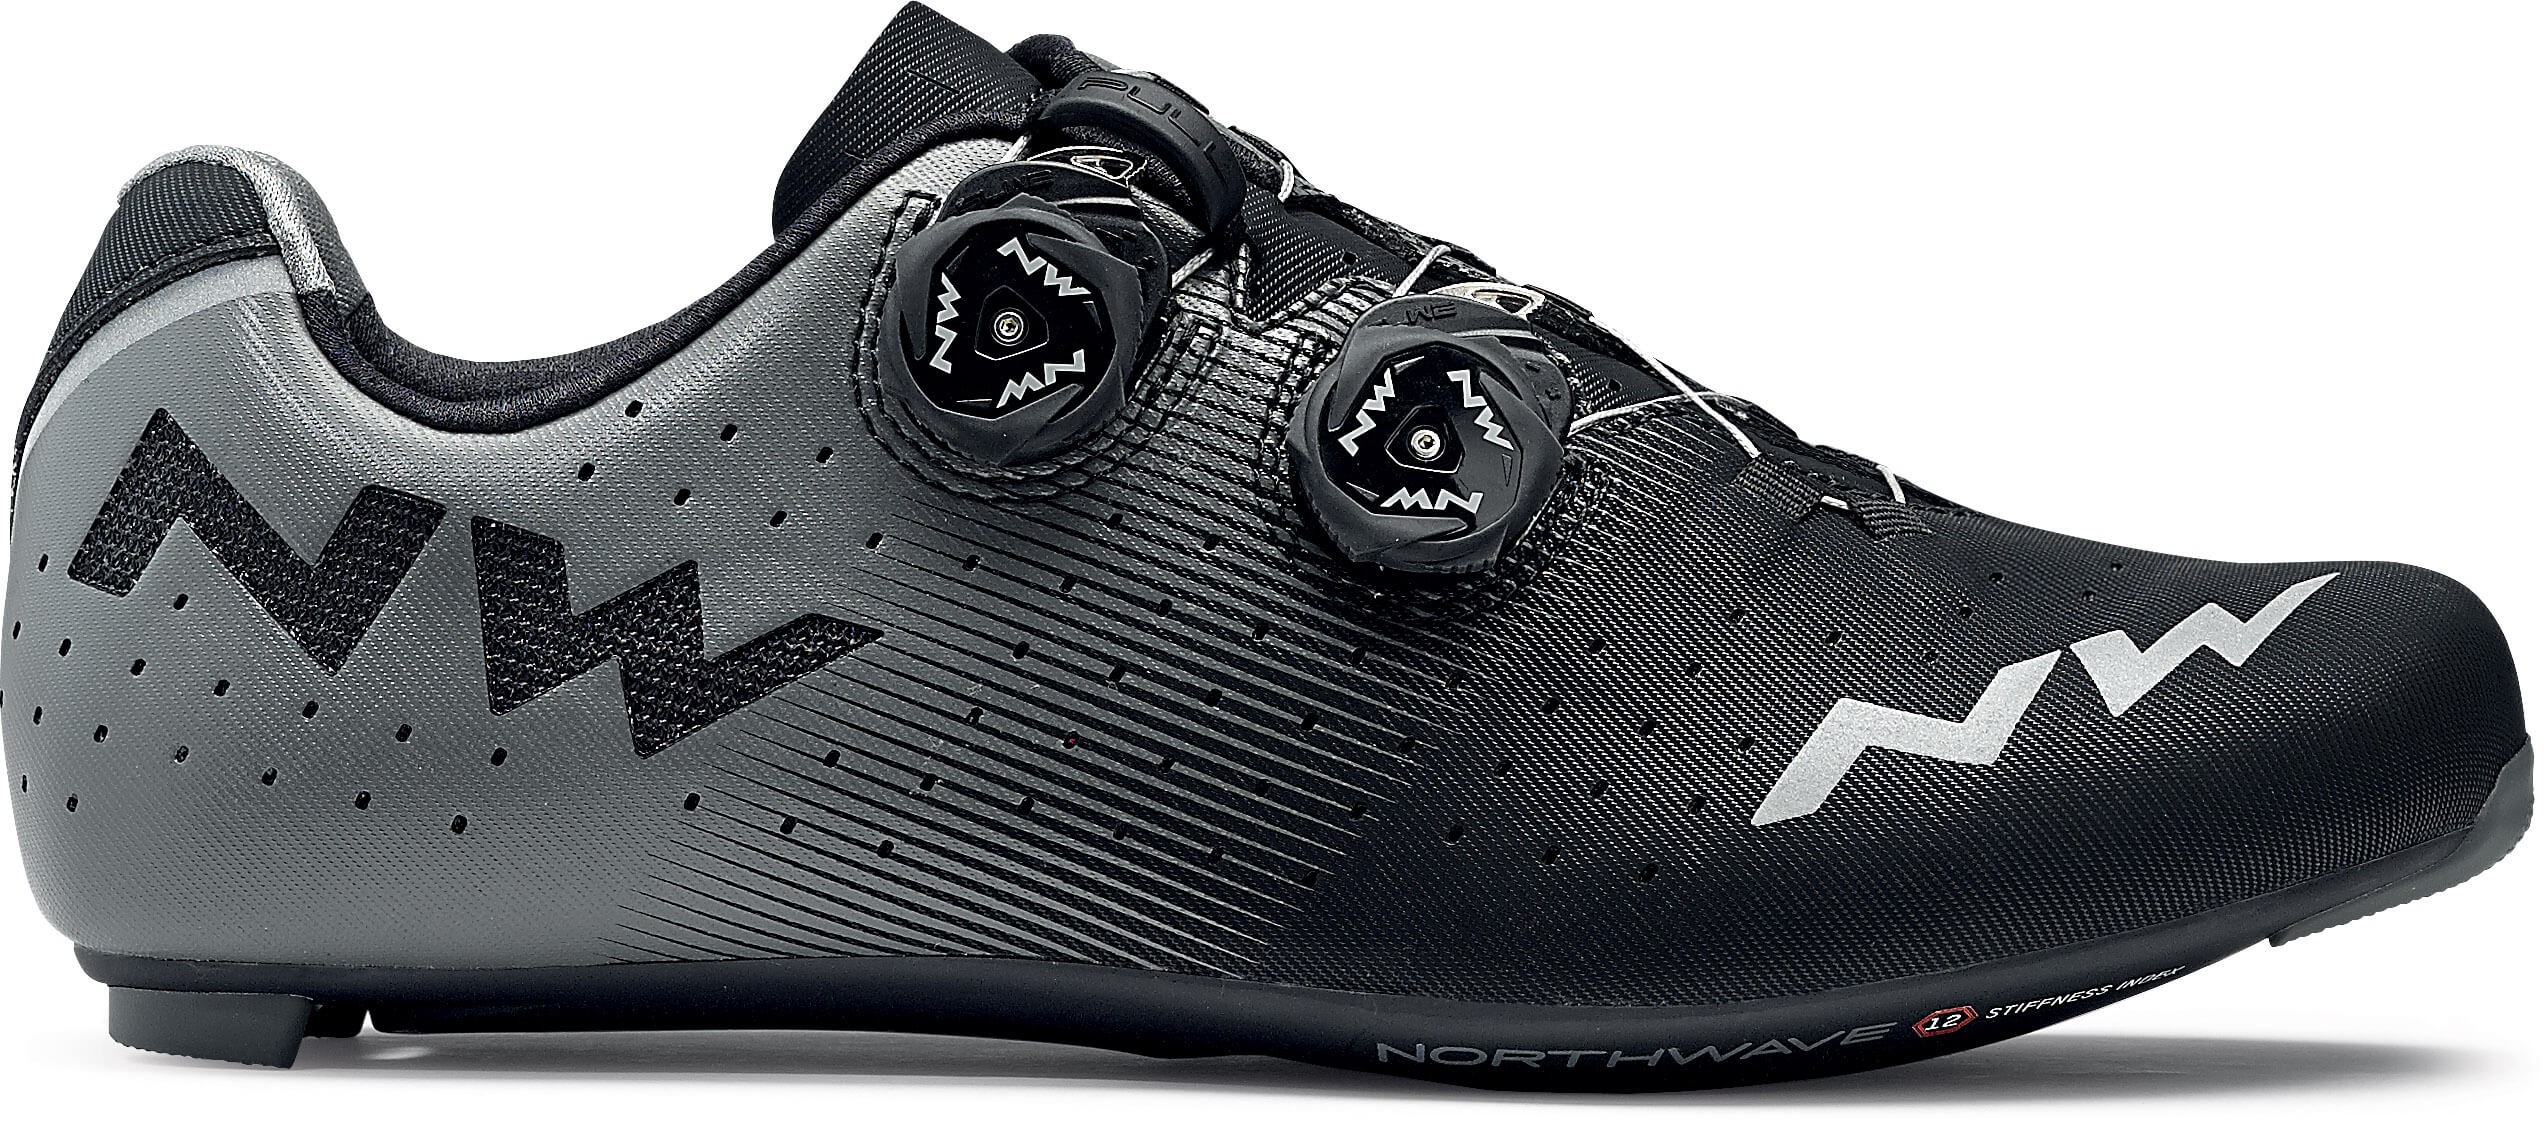 Northwave revolution chaussures de cyclisme noir anthracite